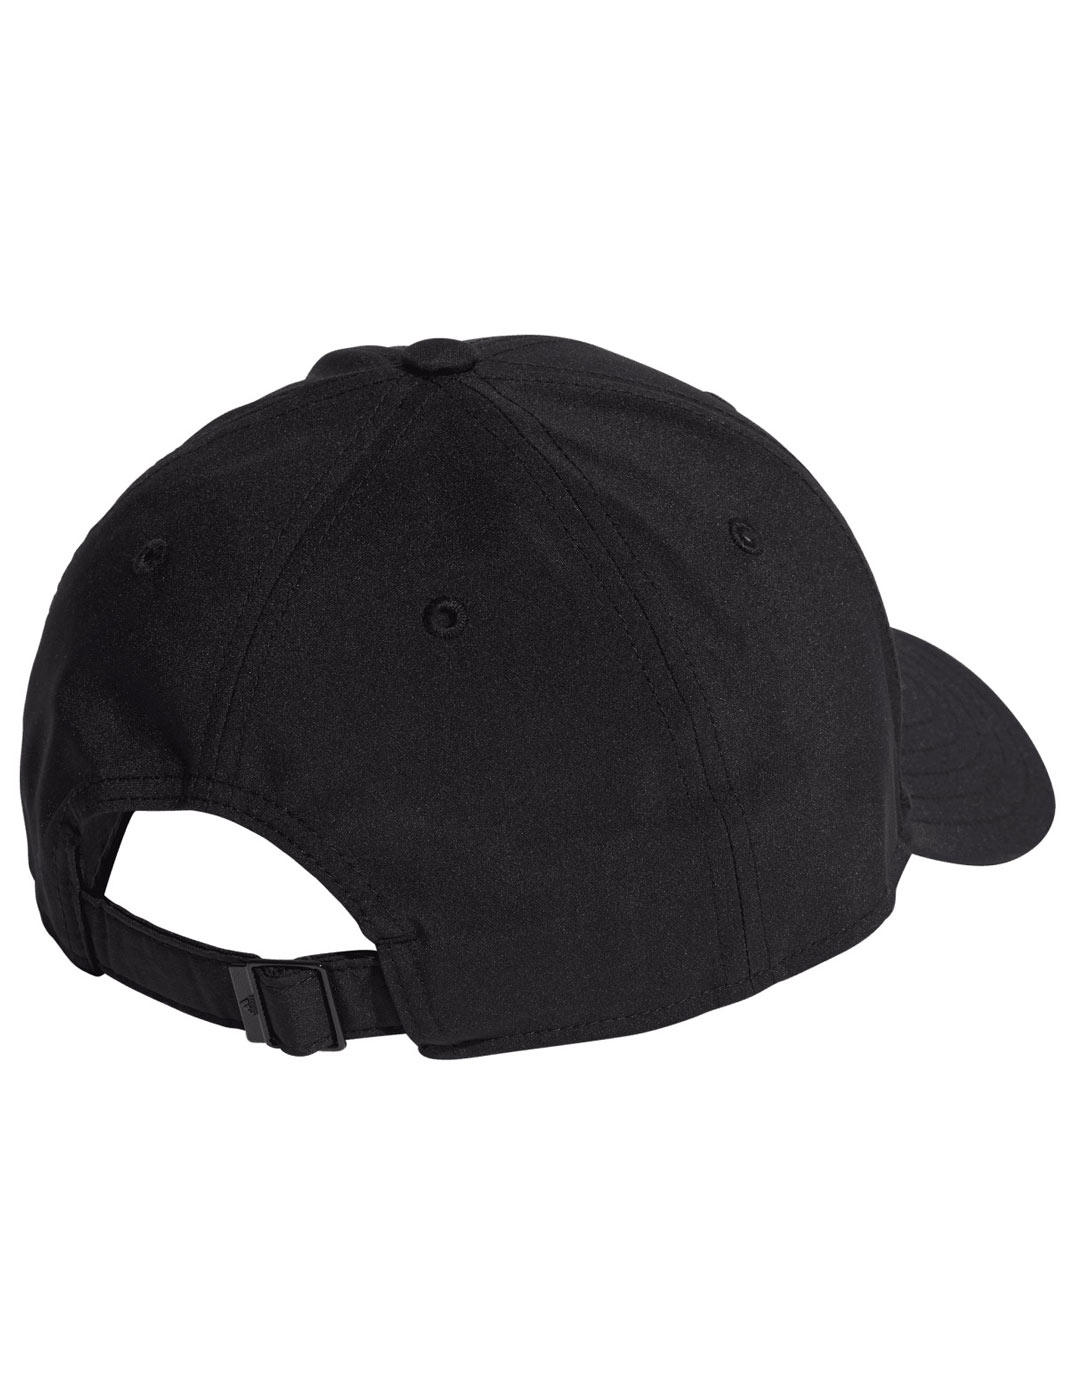 gorra adidas BALLCAP negro